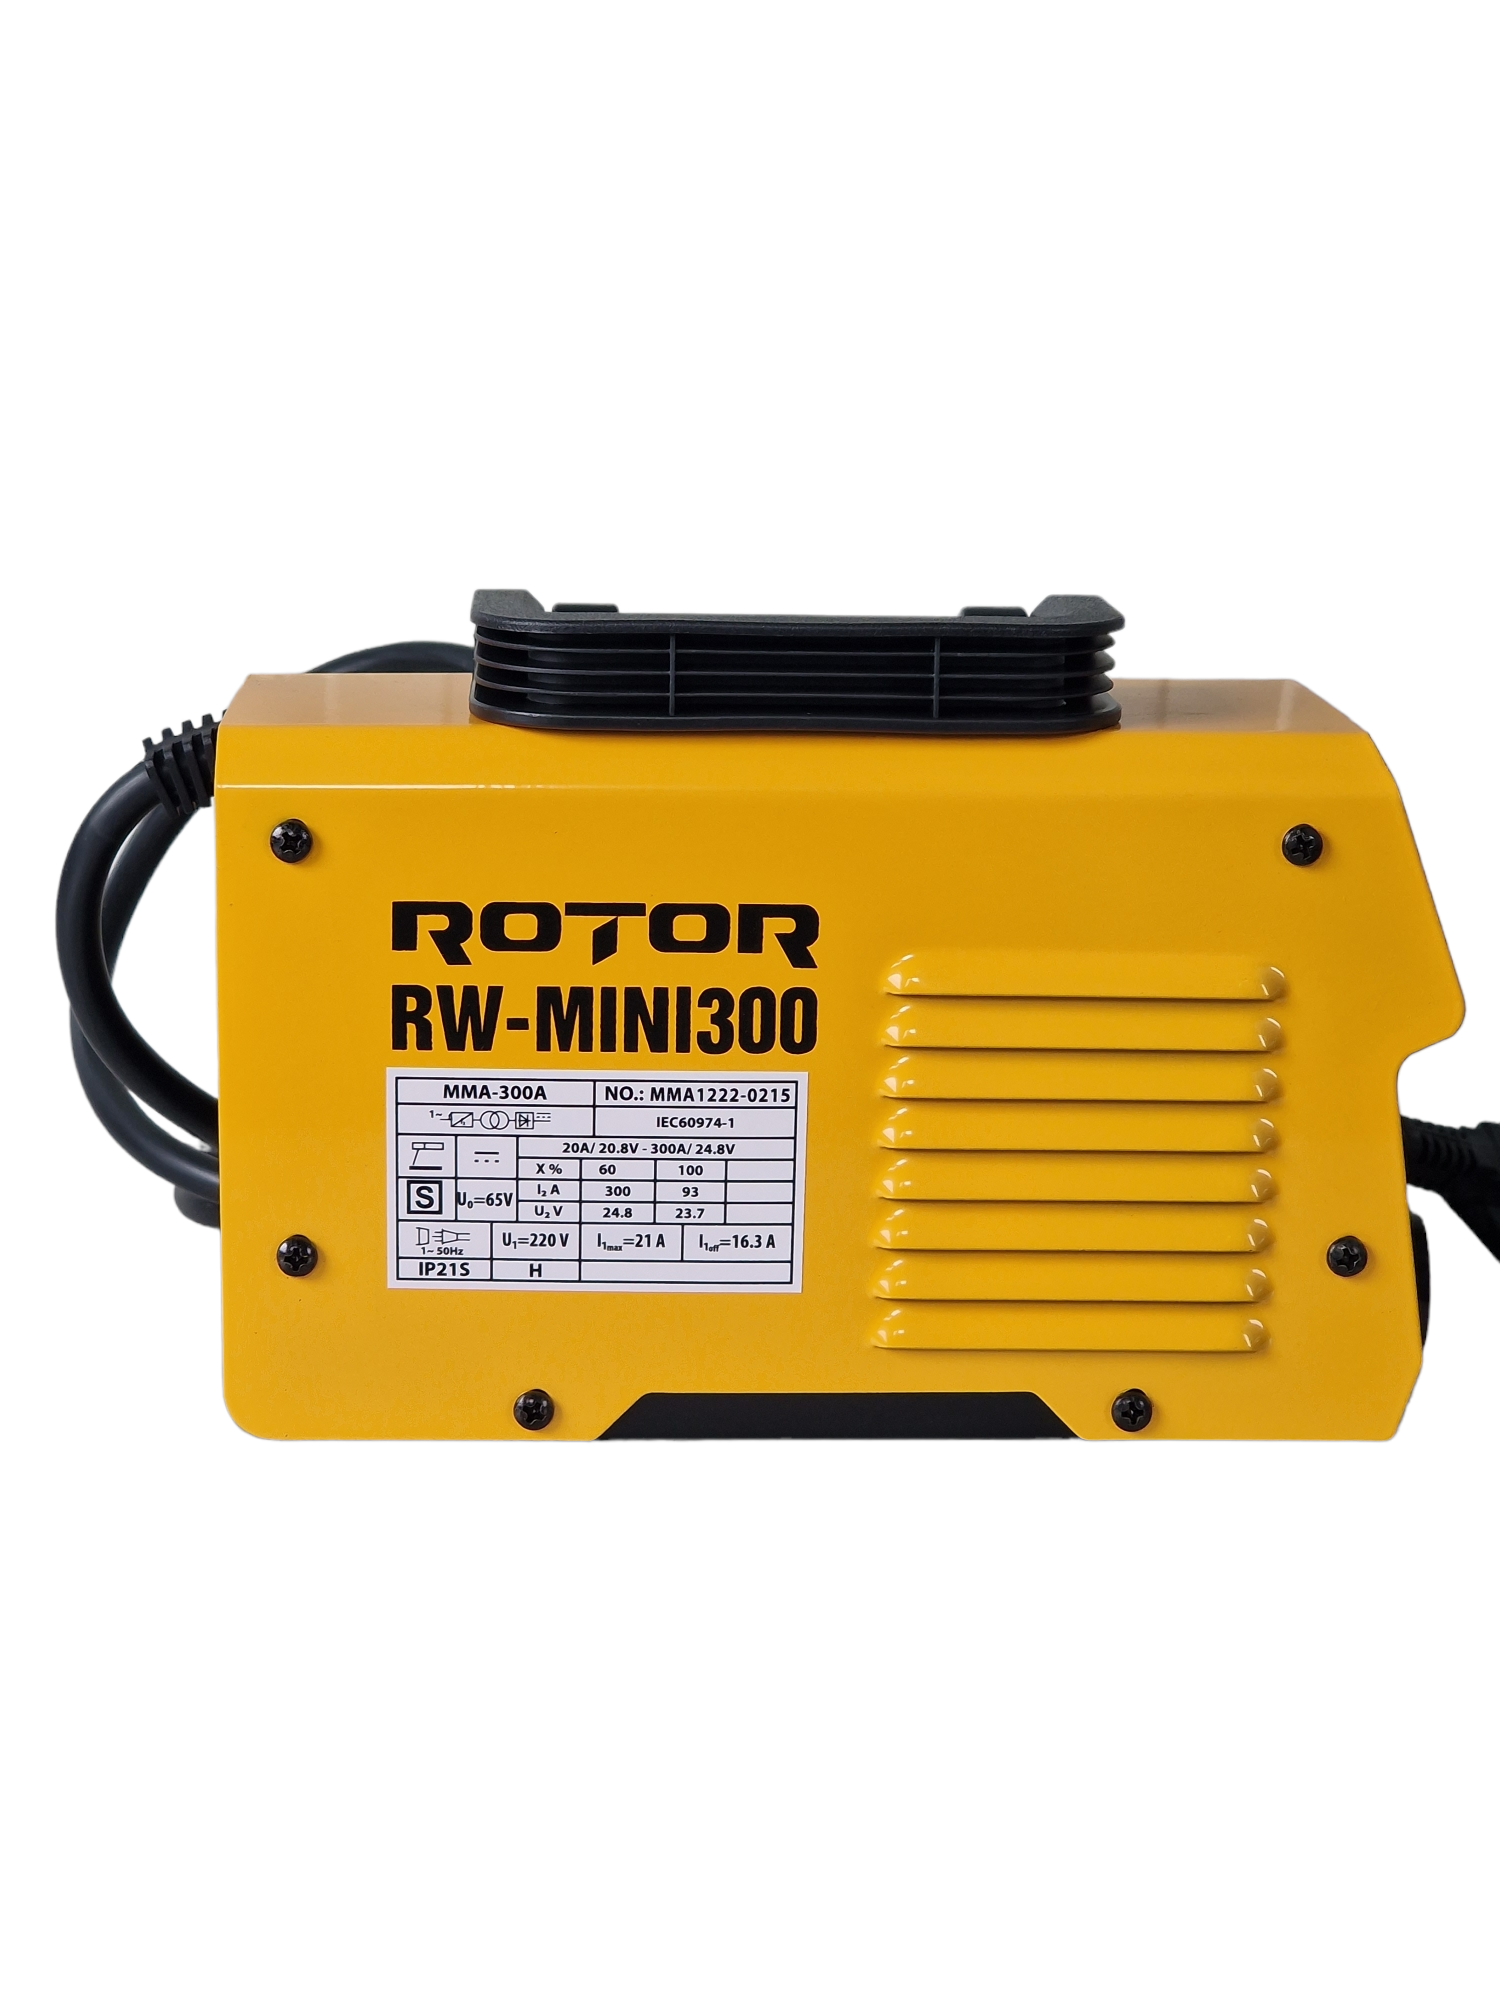 RW-MINI300 invertor de sudura ROTOR, produsul contine taxa TV 2.5 lei, 3.09 kg